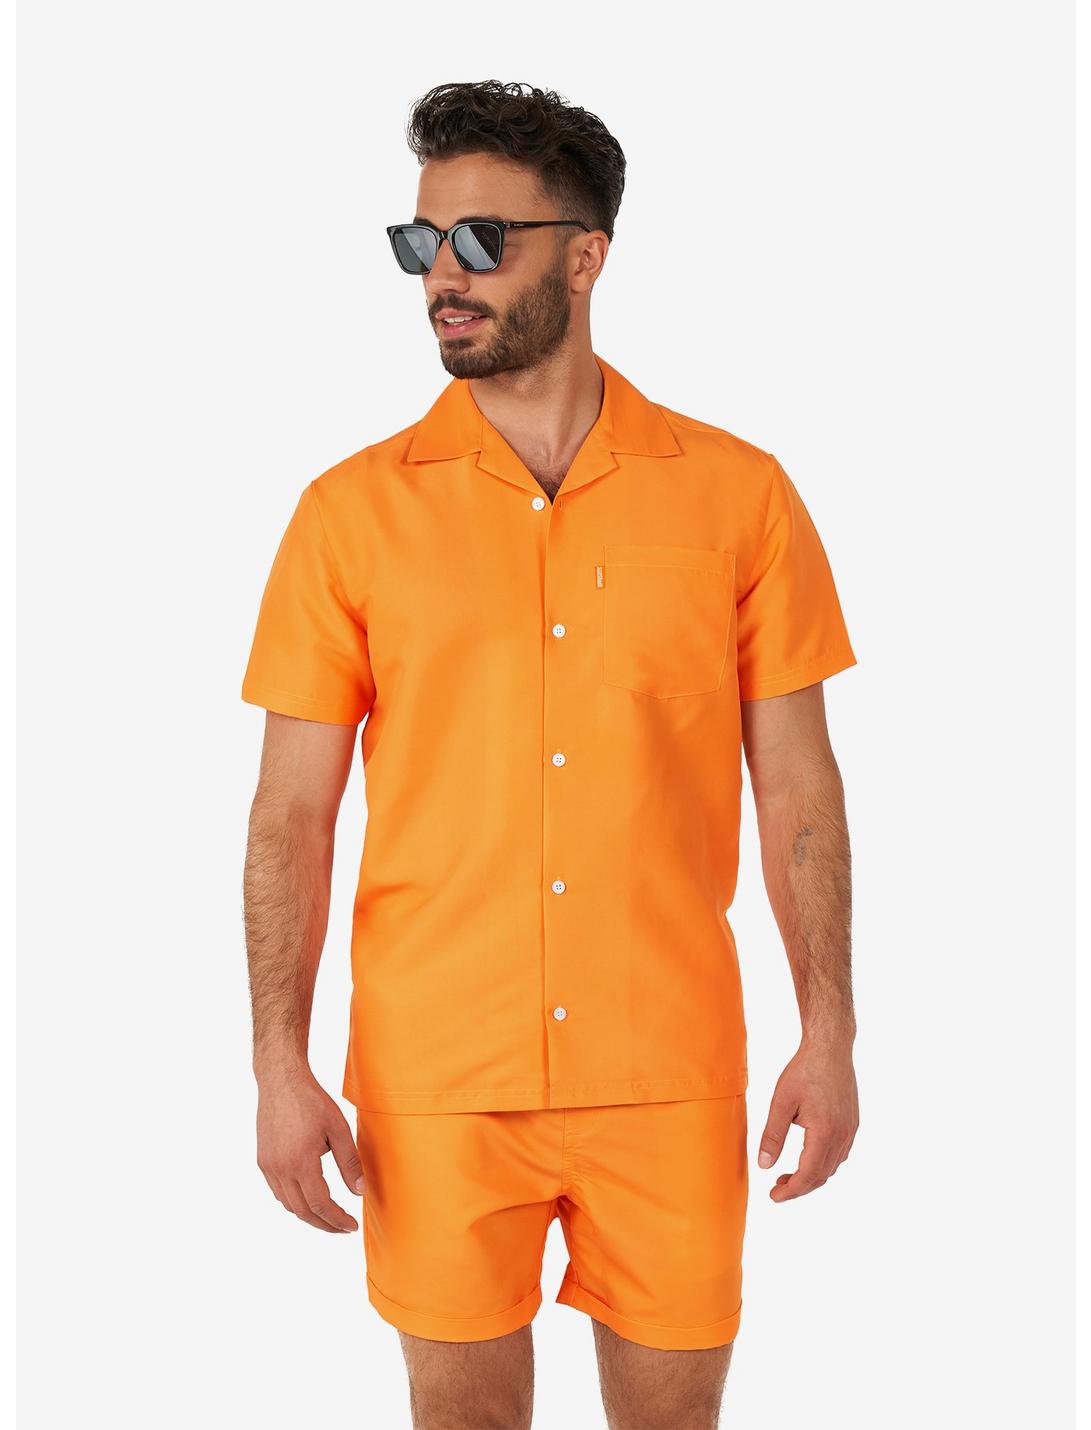 The Orange Summer Button-Up Shirt and Short, ORANGE, hi-res